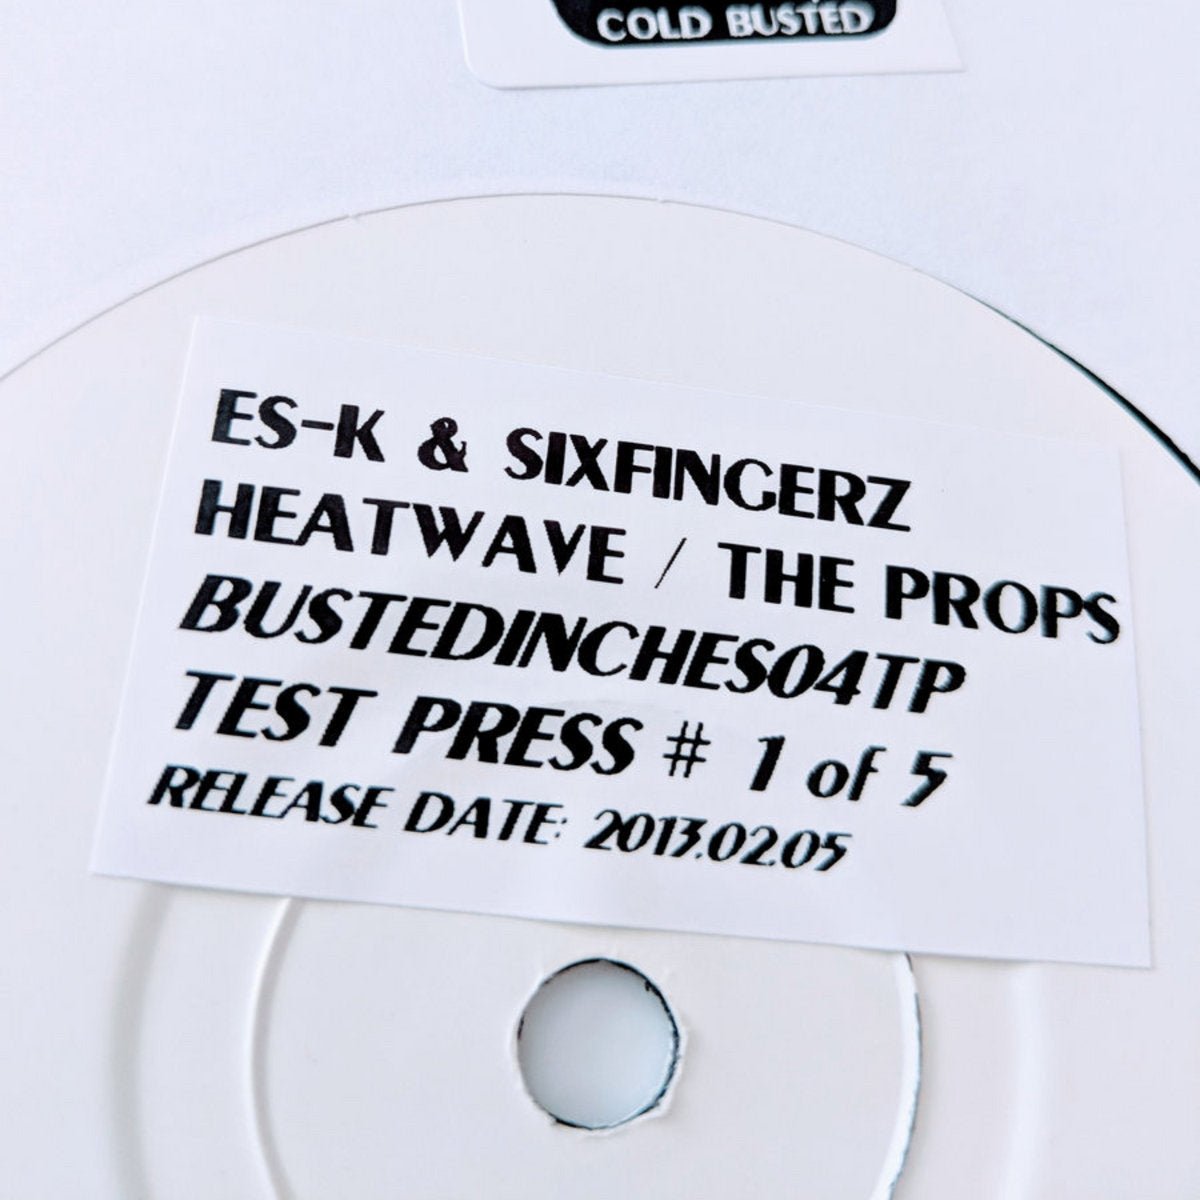 Es-K & Sixfingerz - Heatwave / The Props - Limited Edition 7 Inch Vinyl Test Pressing - Cold Busted